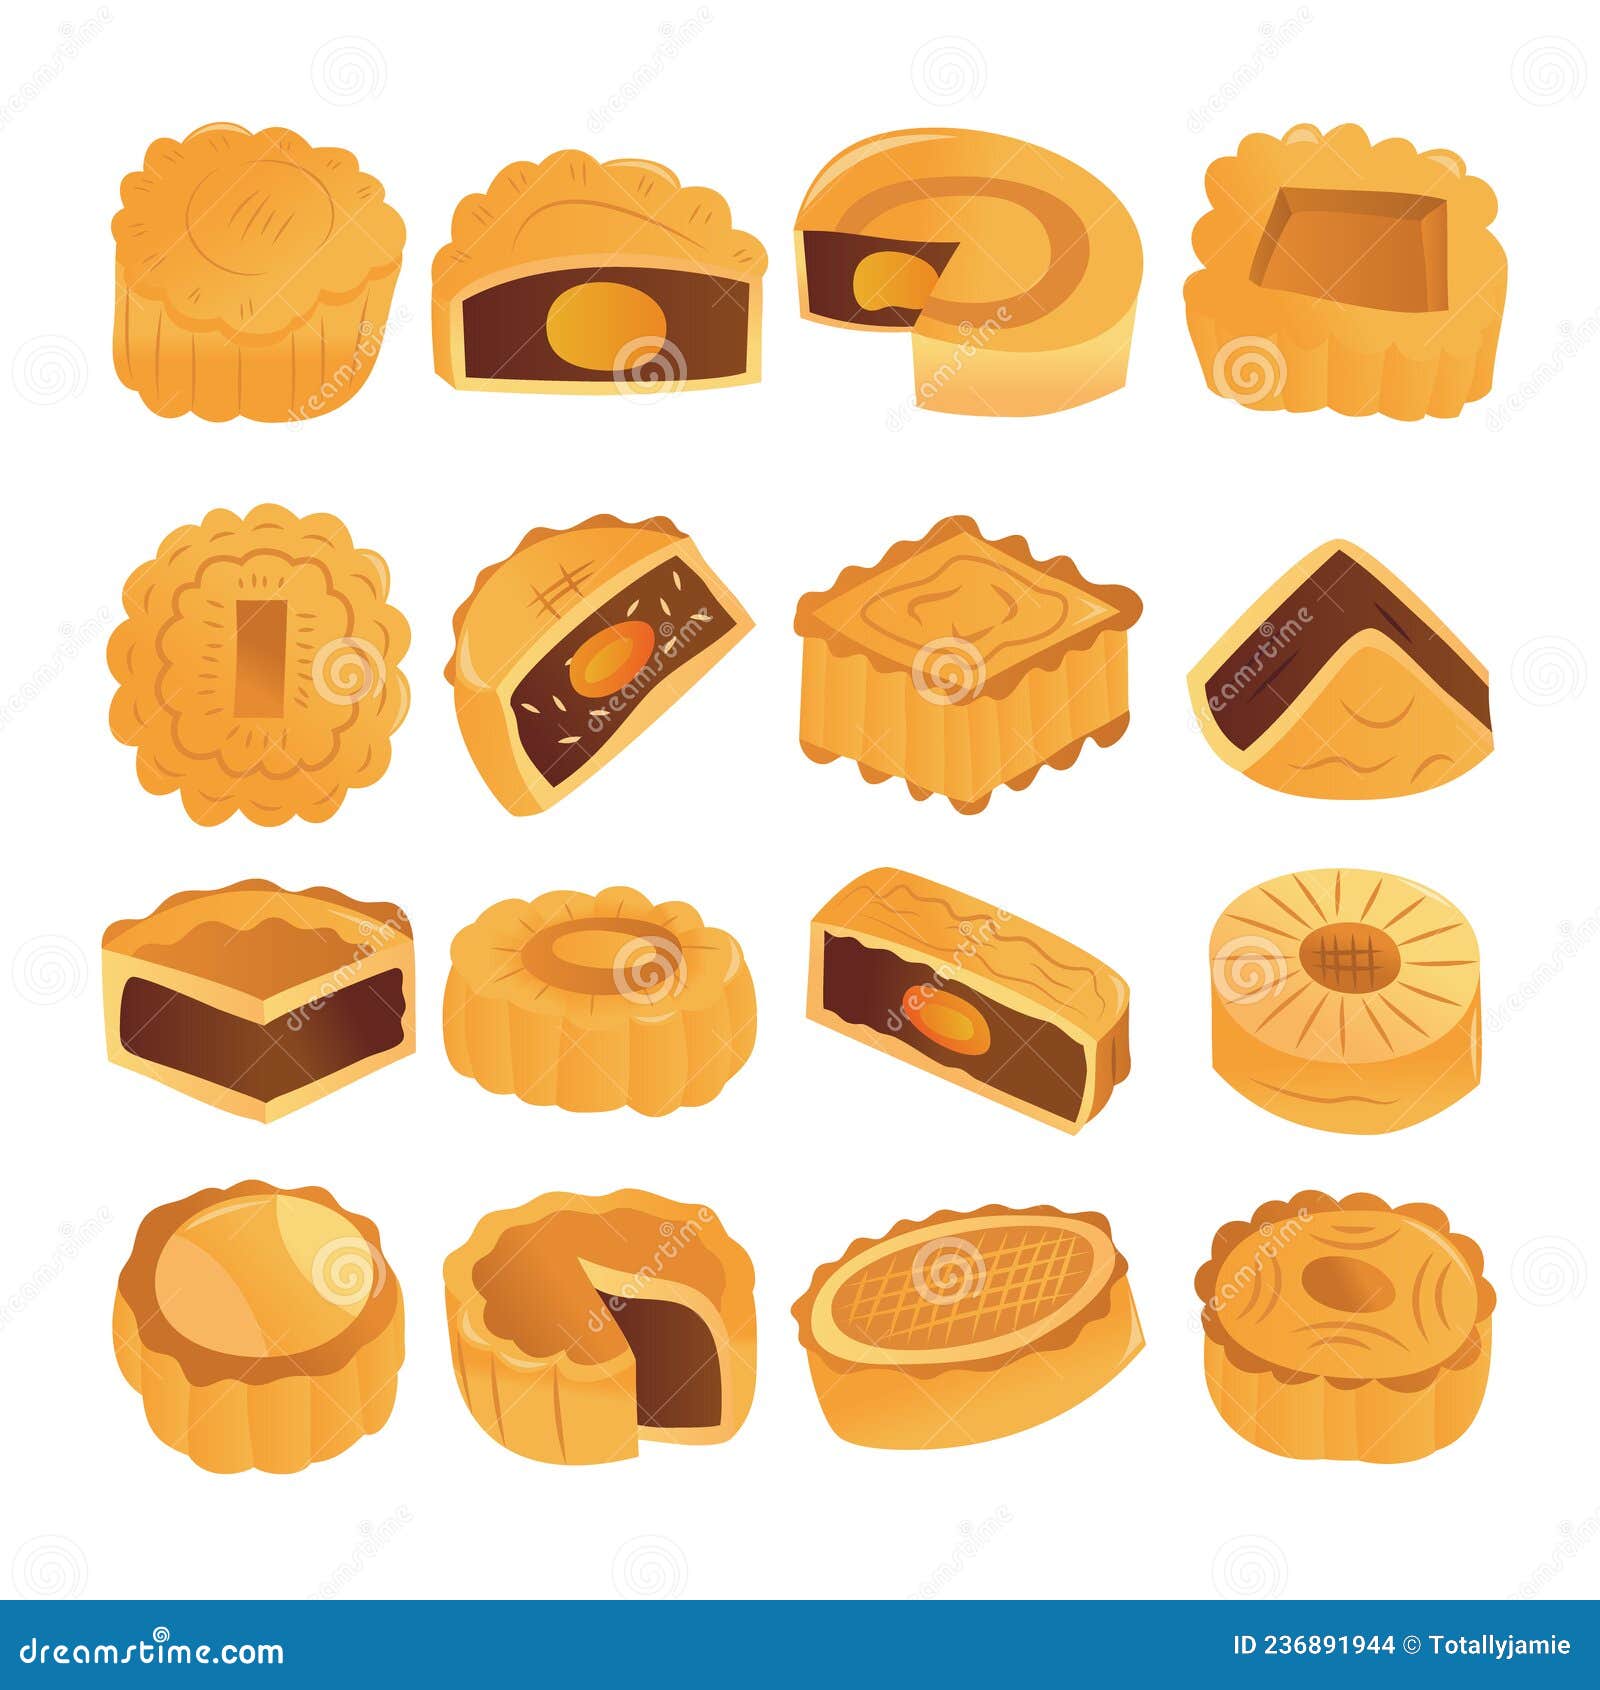 Cartoon Mid Autumn Festival Mooncakes Set. A vector illustration of various mid autumn festival mooncakes set